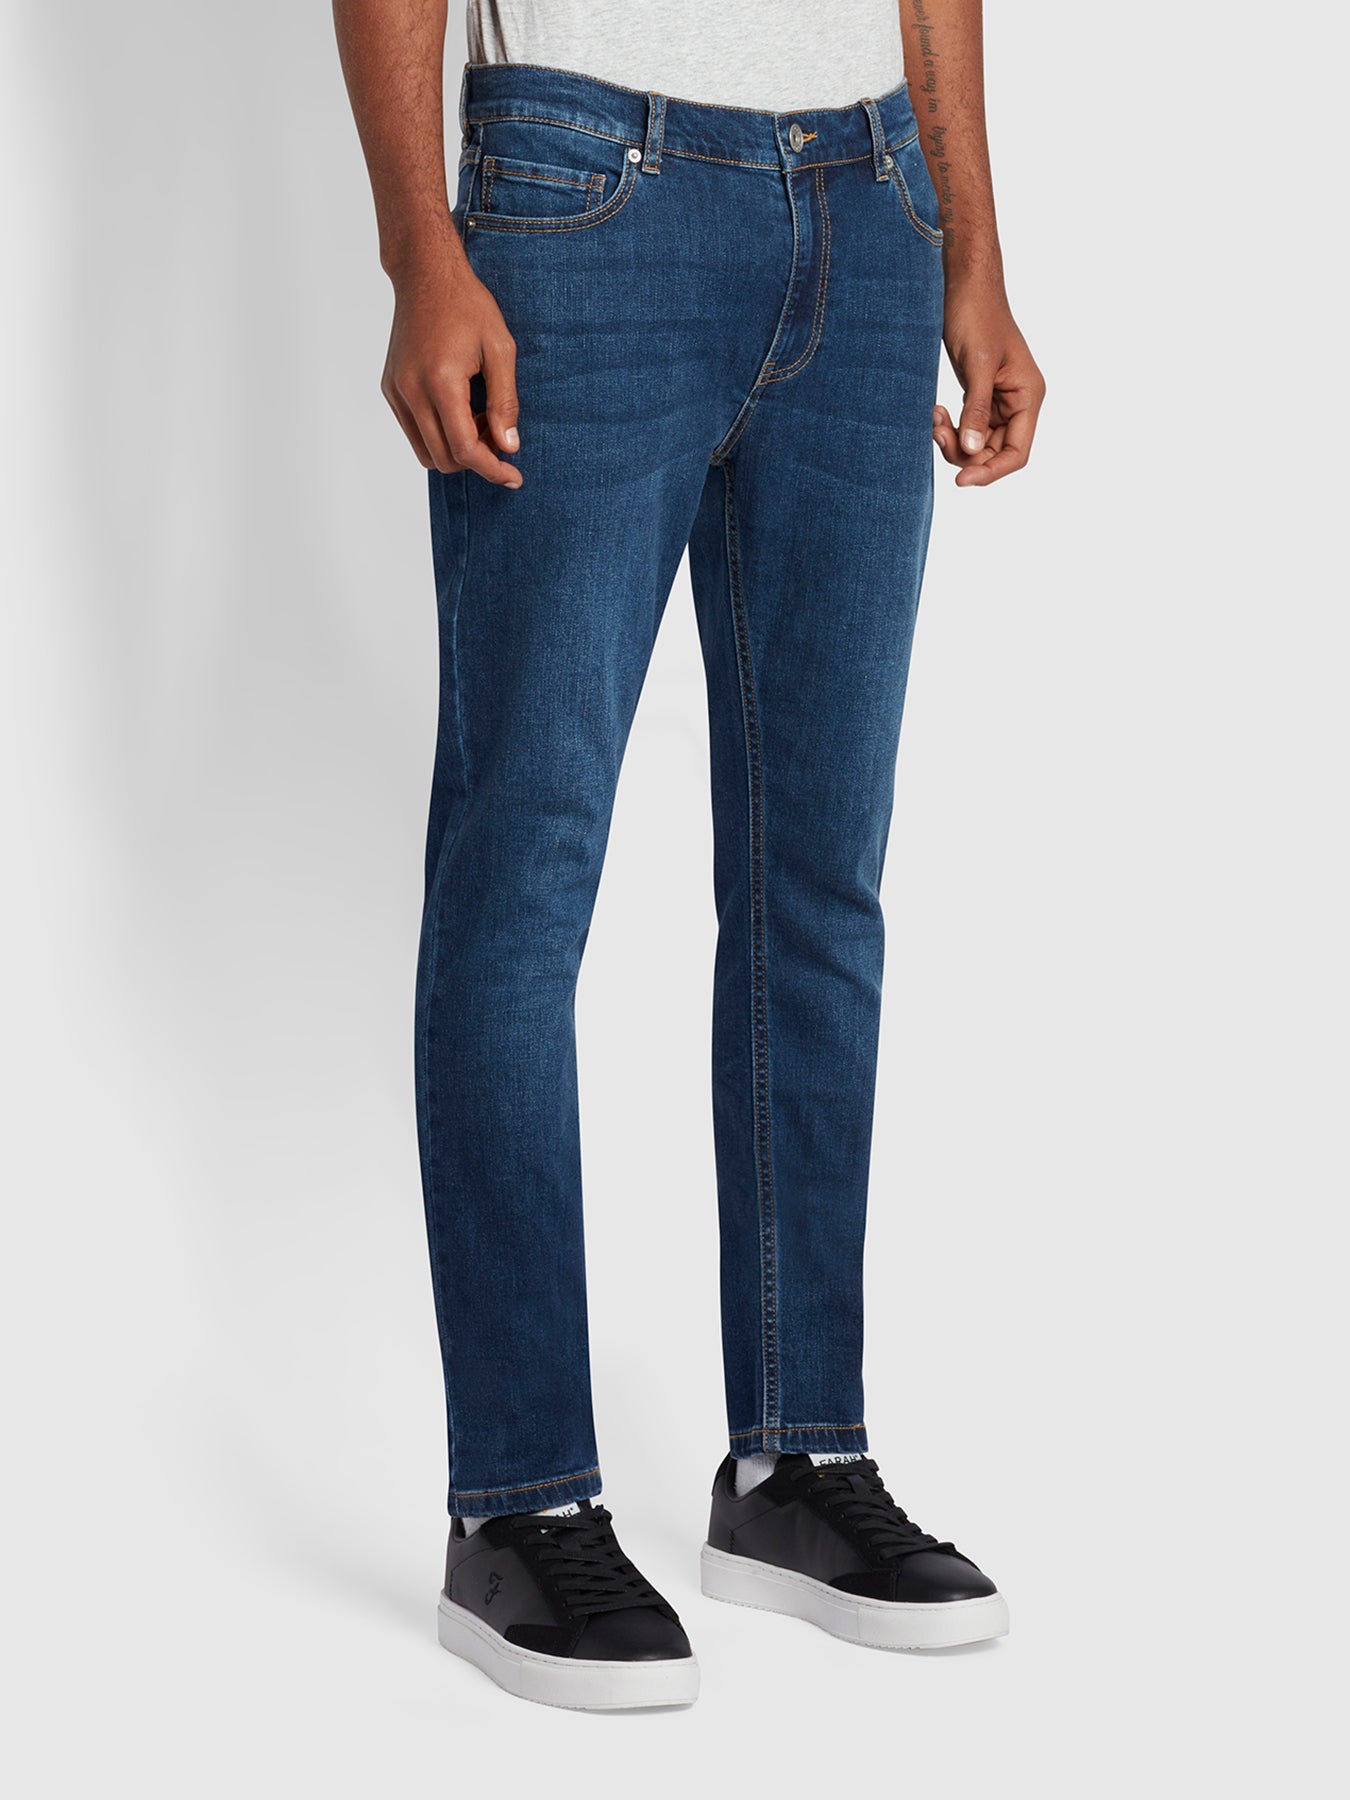 View Drake Slim Fit Stretch Jeans In Mid Denim information